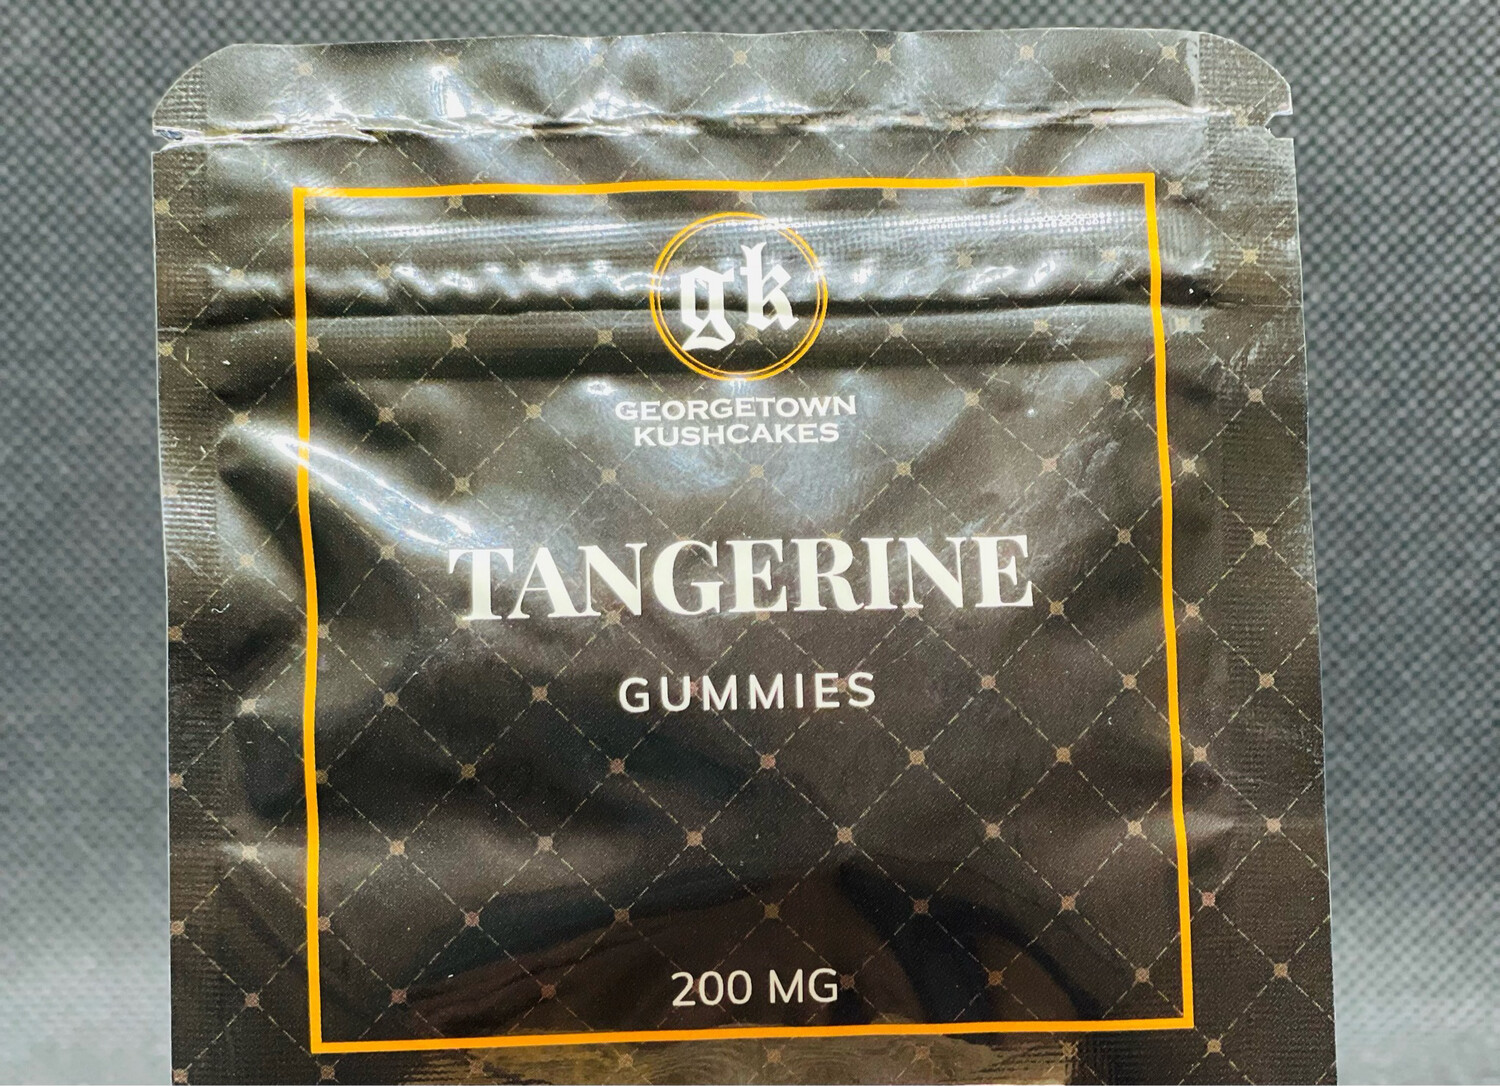 Tangerine Gummies (Georgetown Kushcakes) 00059